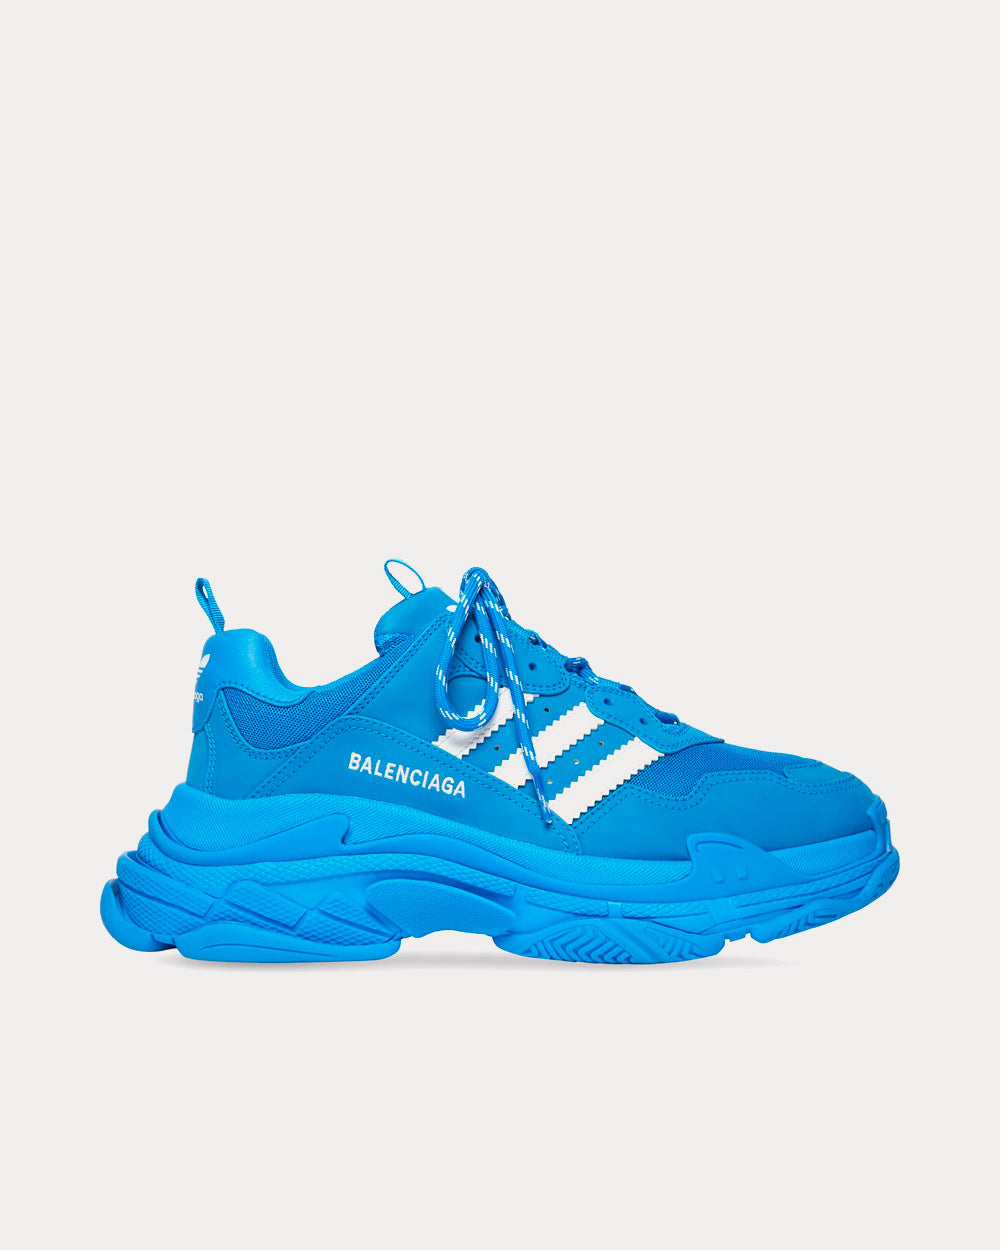 Balenciaga x Adidas - Triple S Blue / White Low Top Sneakers